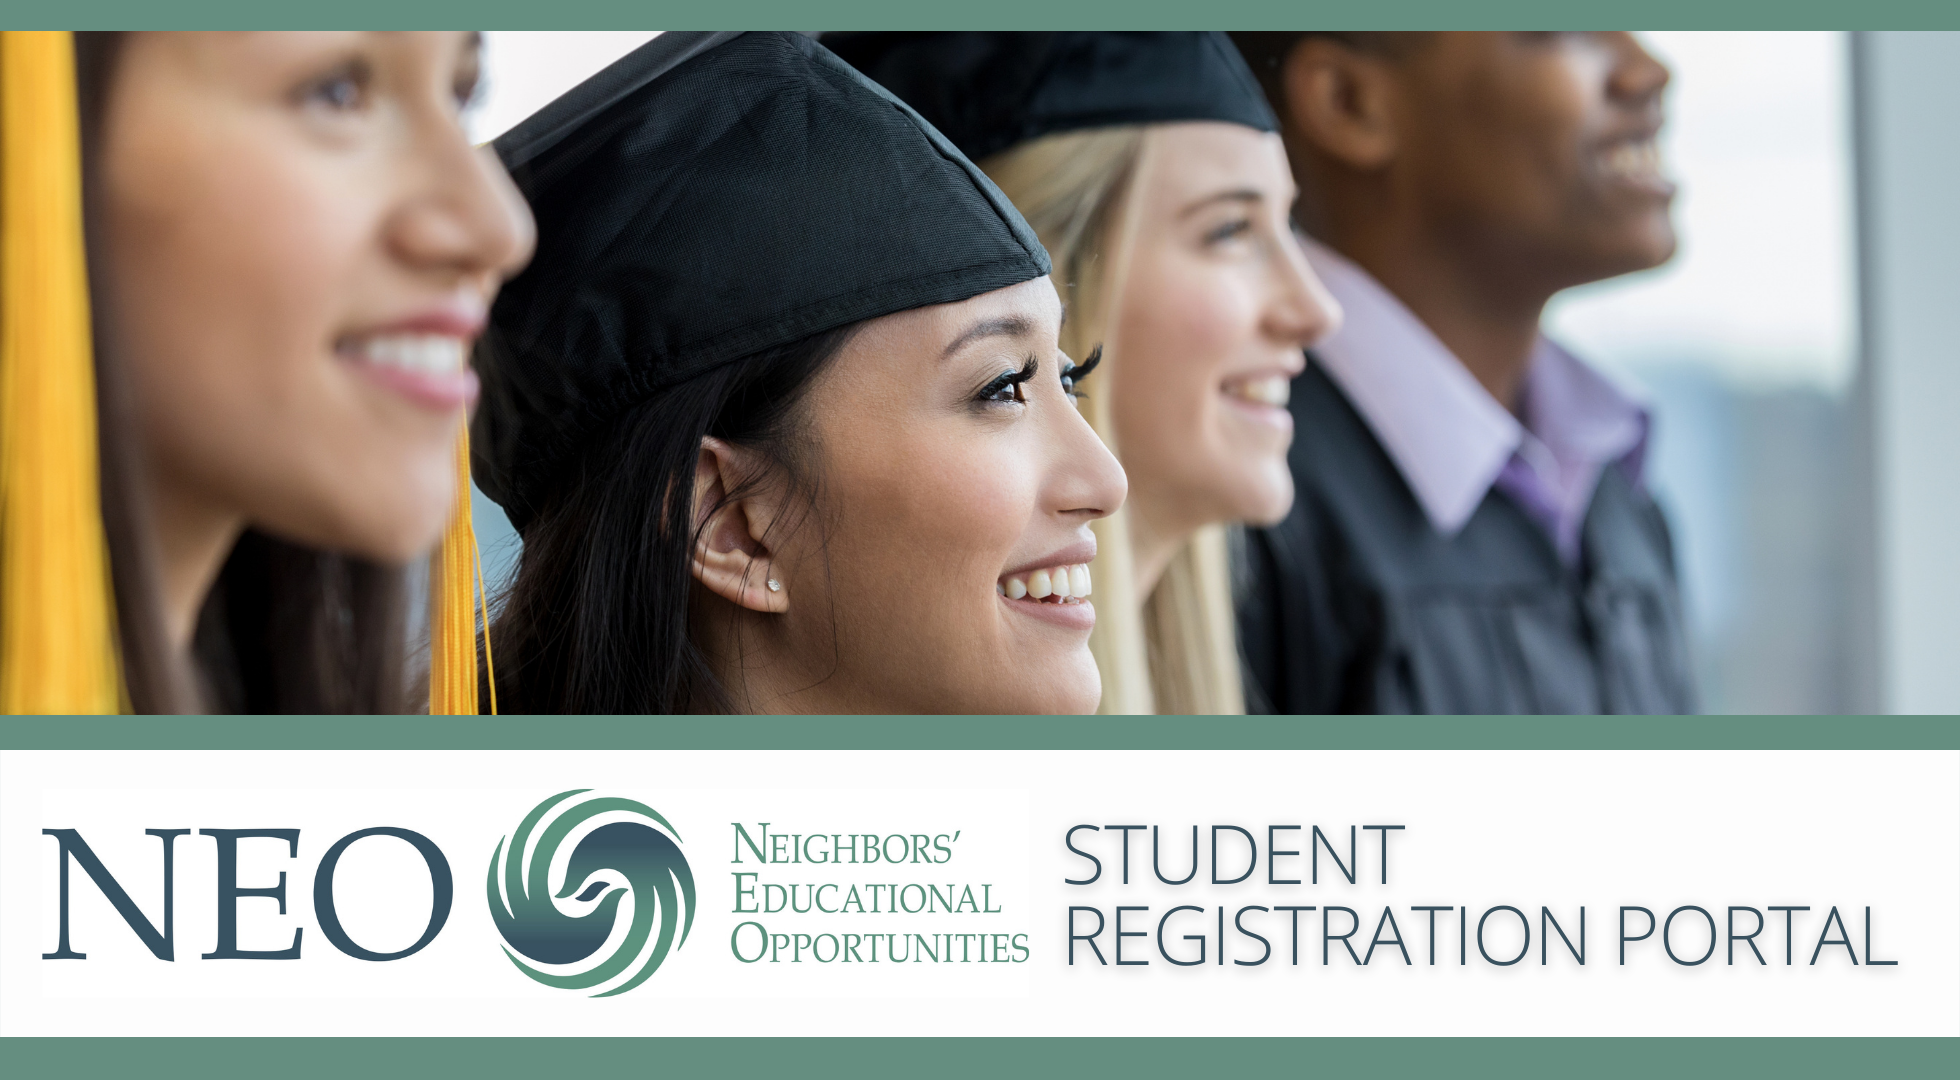 Student Registration Portal